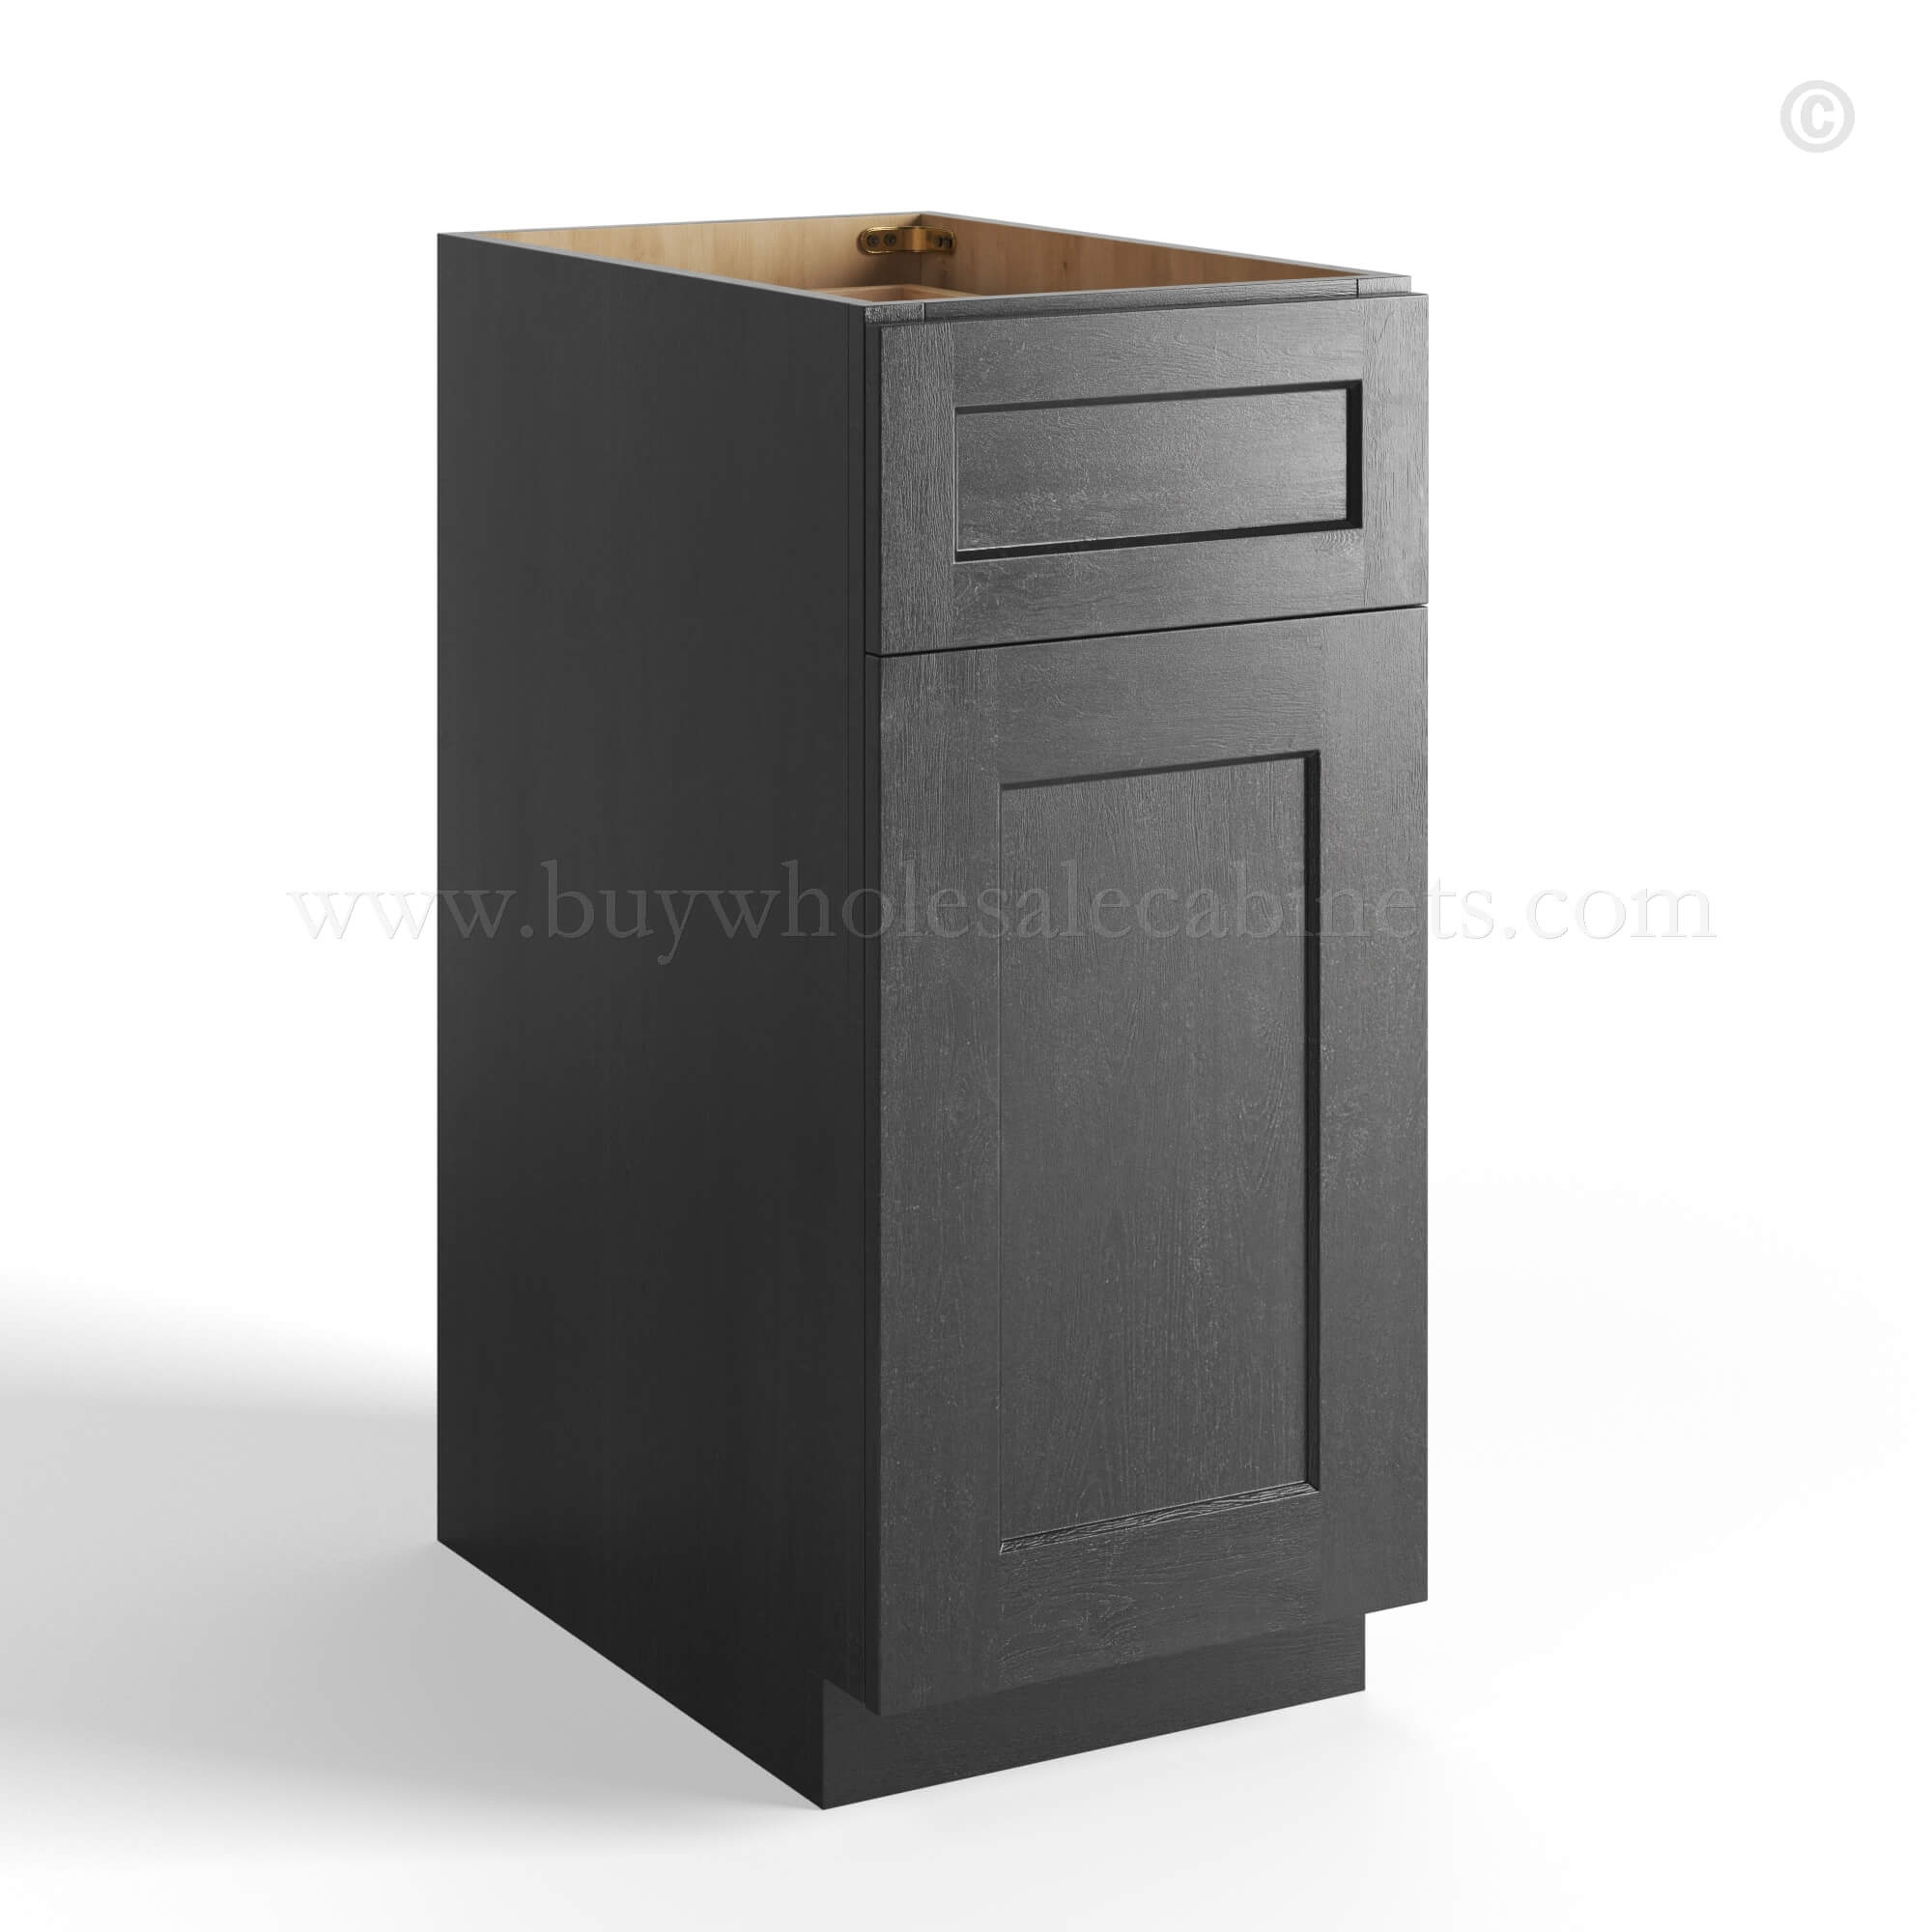 Charcoal Black Shaker Base Cabinet Single Door, rta cabinets, wholesale cabinets